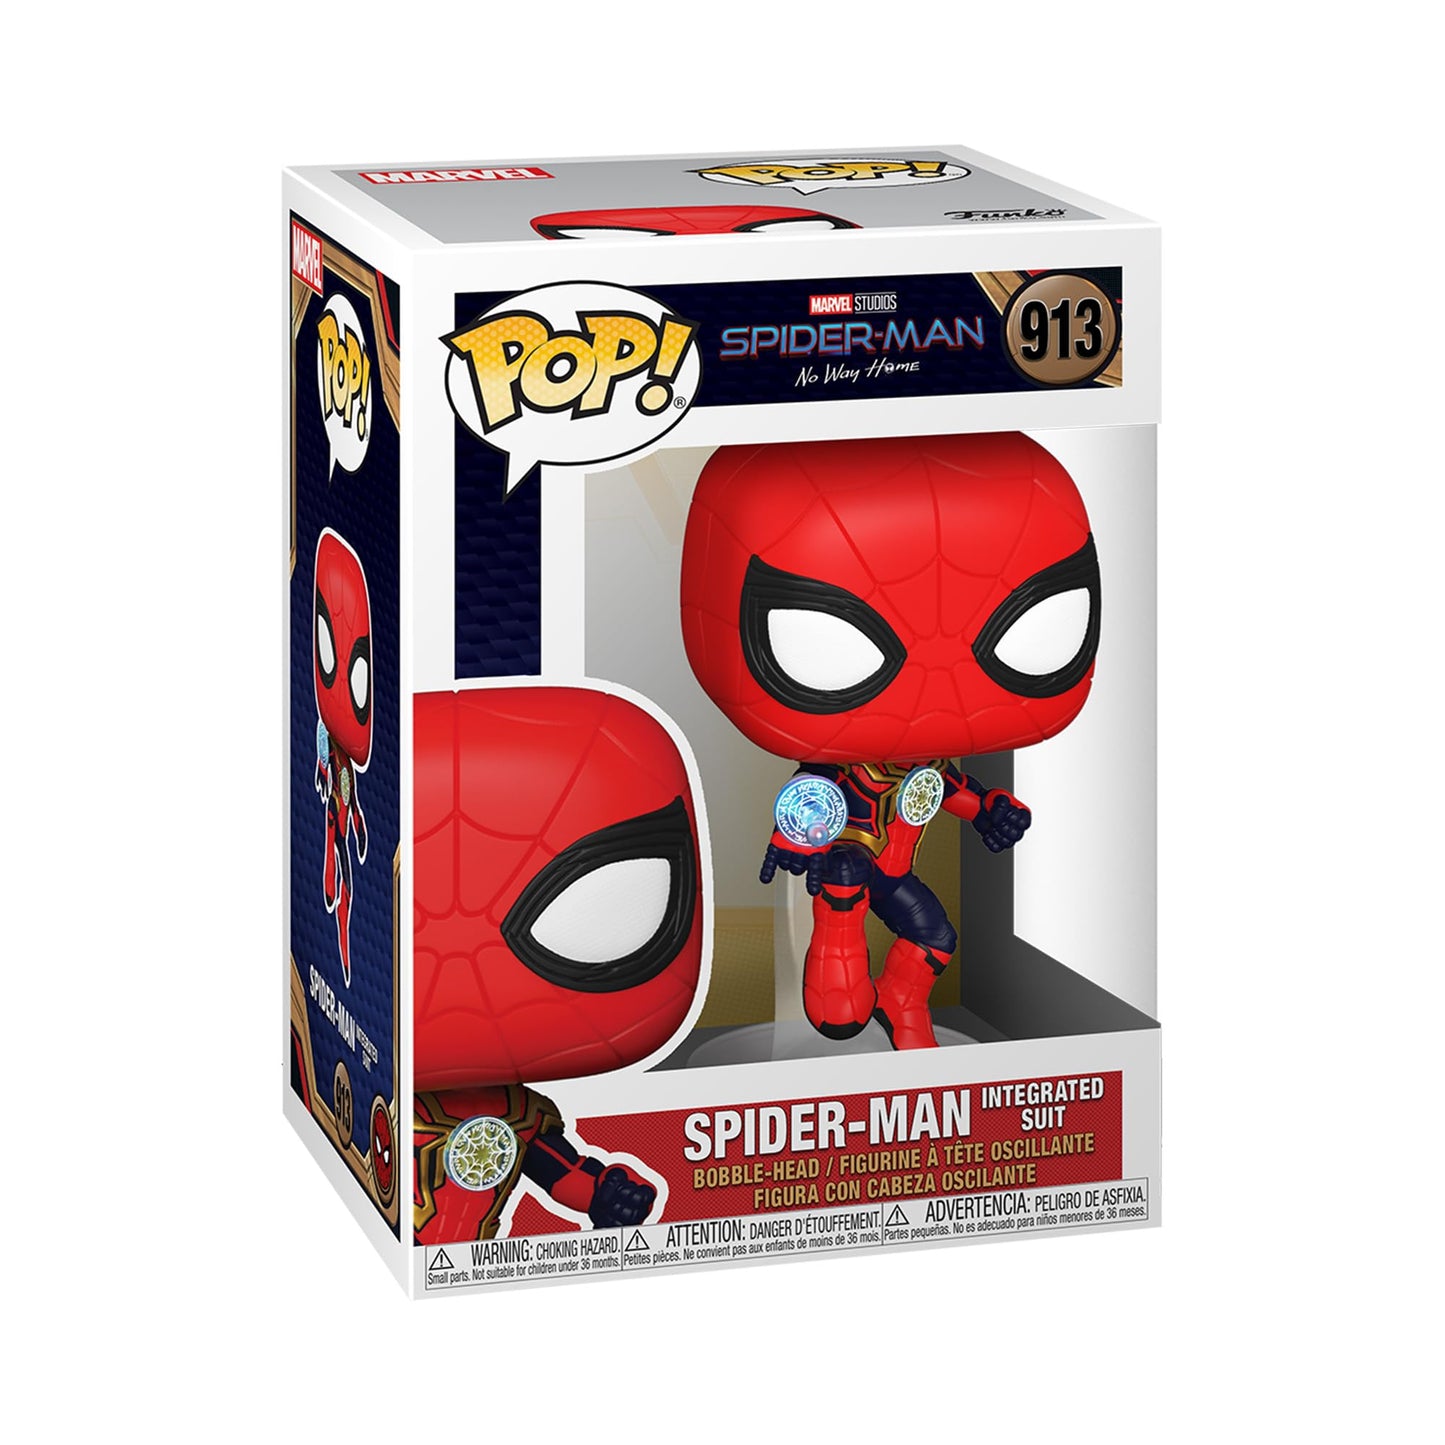 Pop! Spider Man Integrated Suit 913